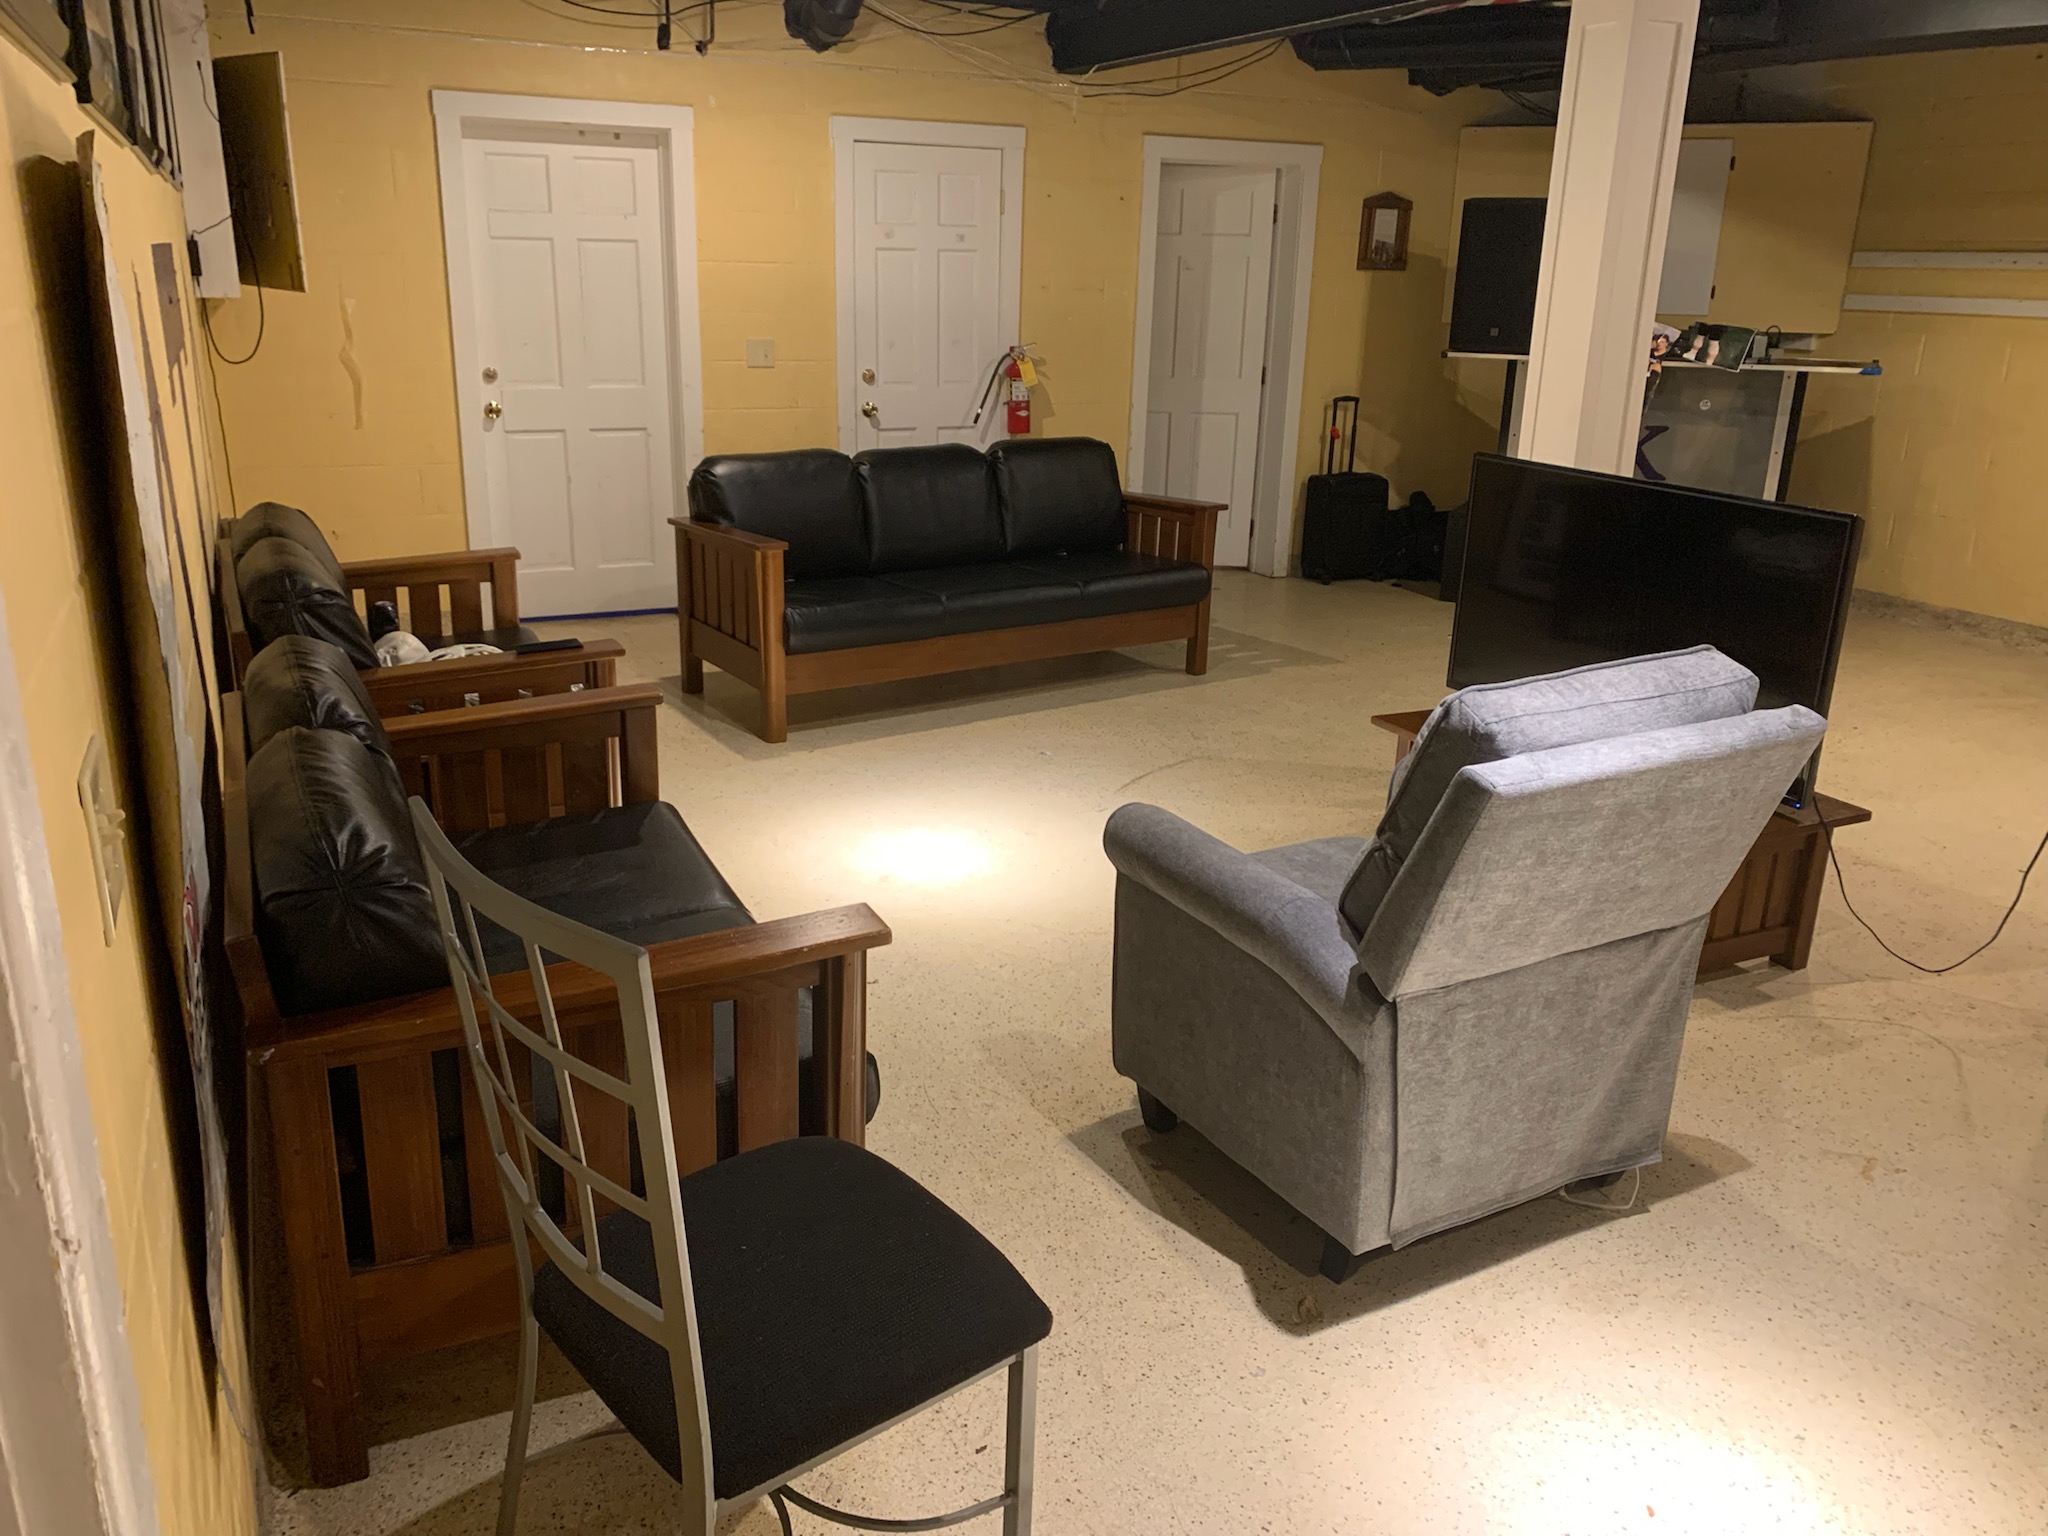 New Lodge Furniture